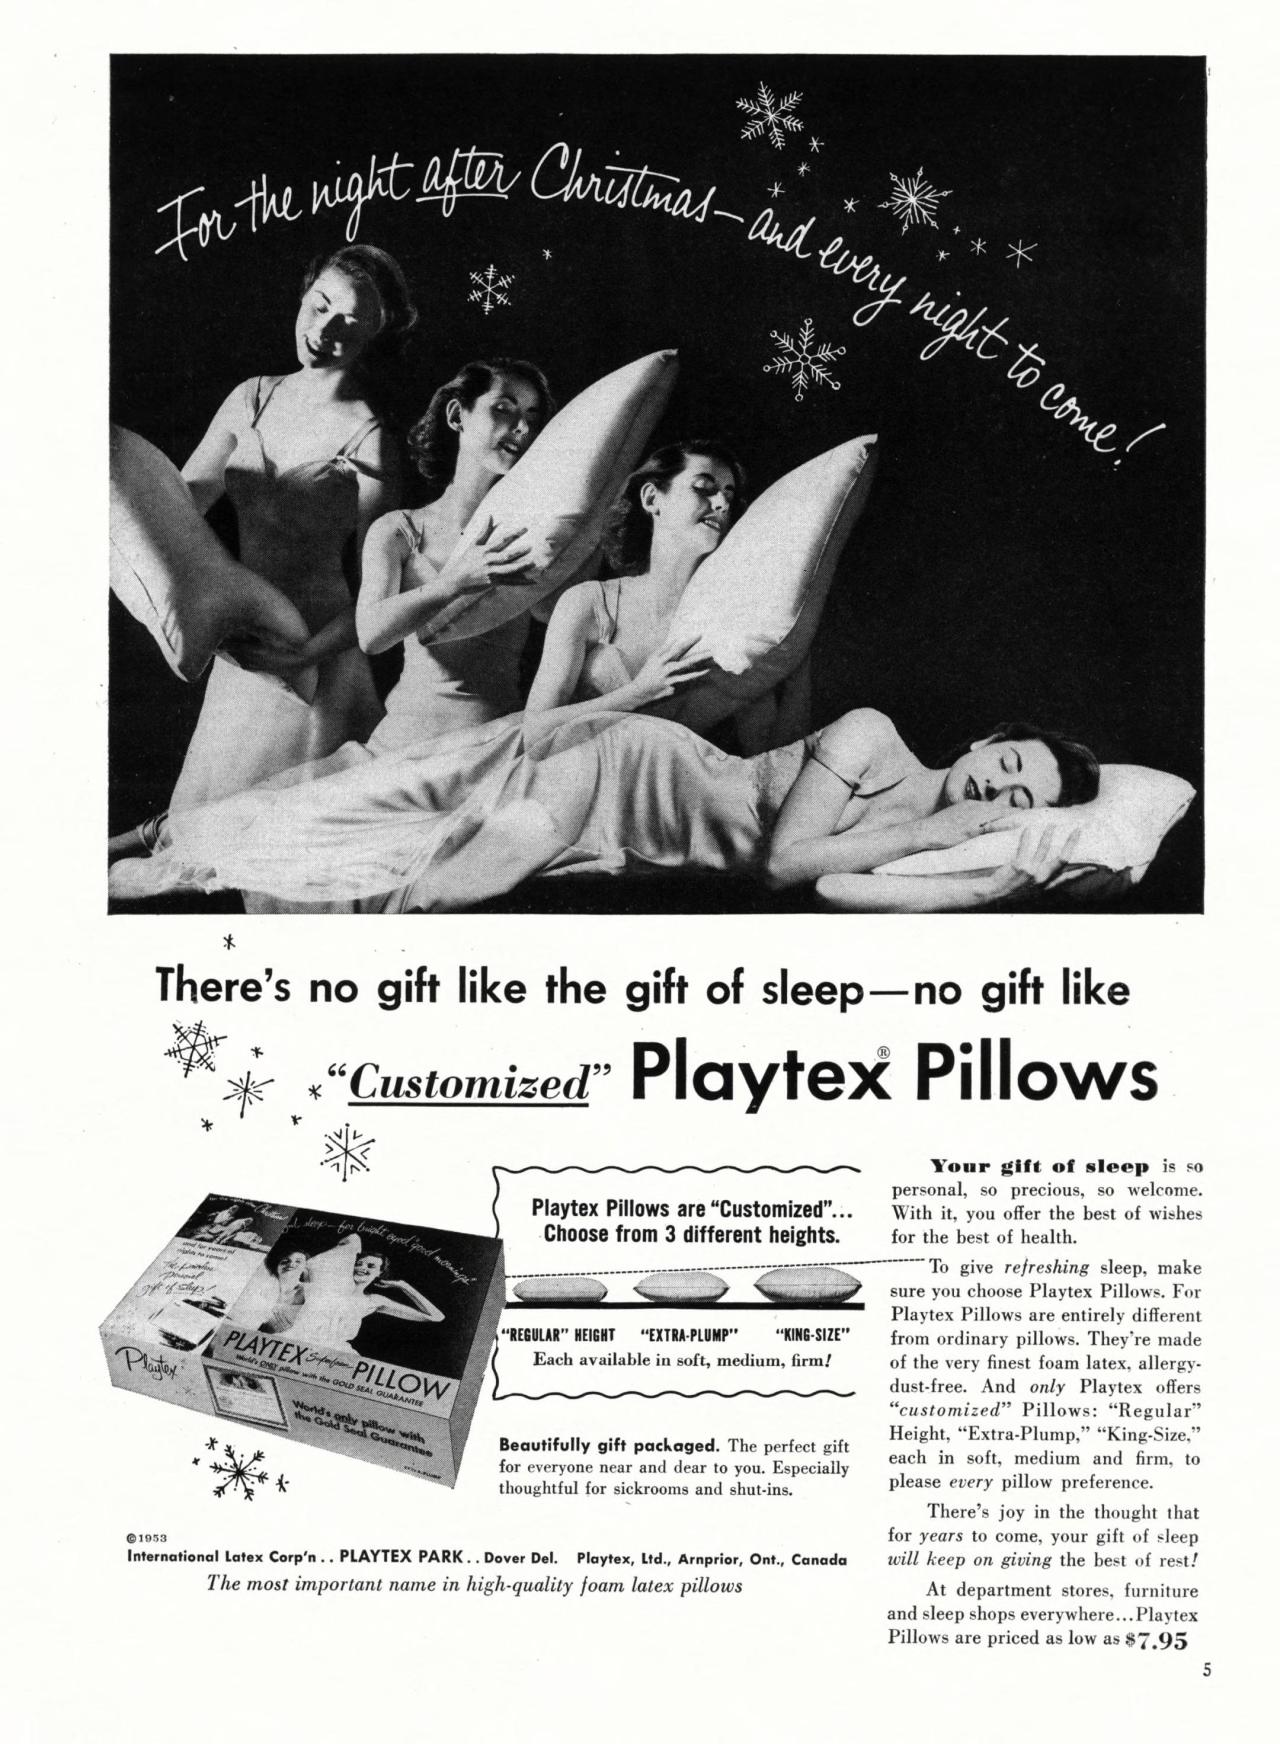 Playtex Pillows - published in Cosmopolitan (Vol. 135, No. 6) - December 1953